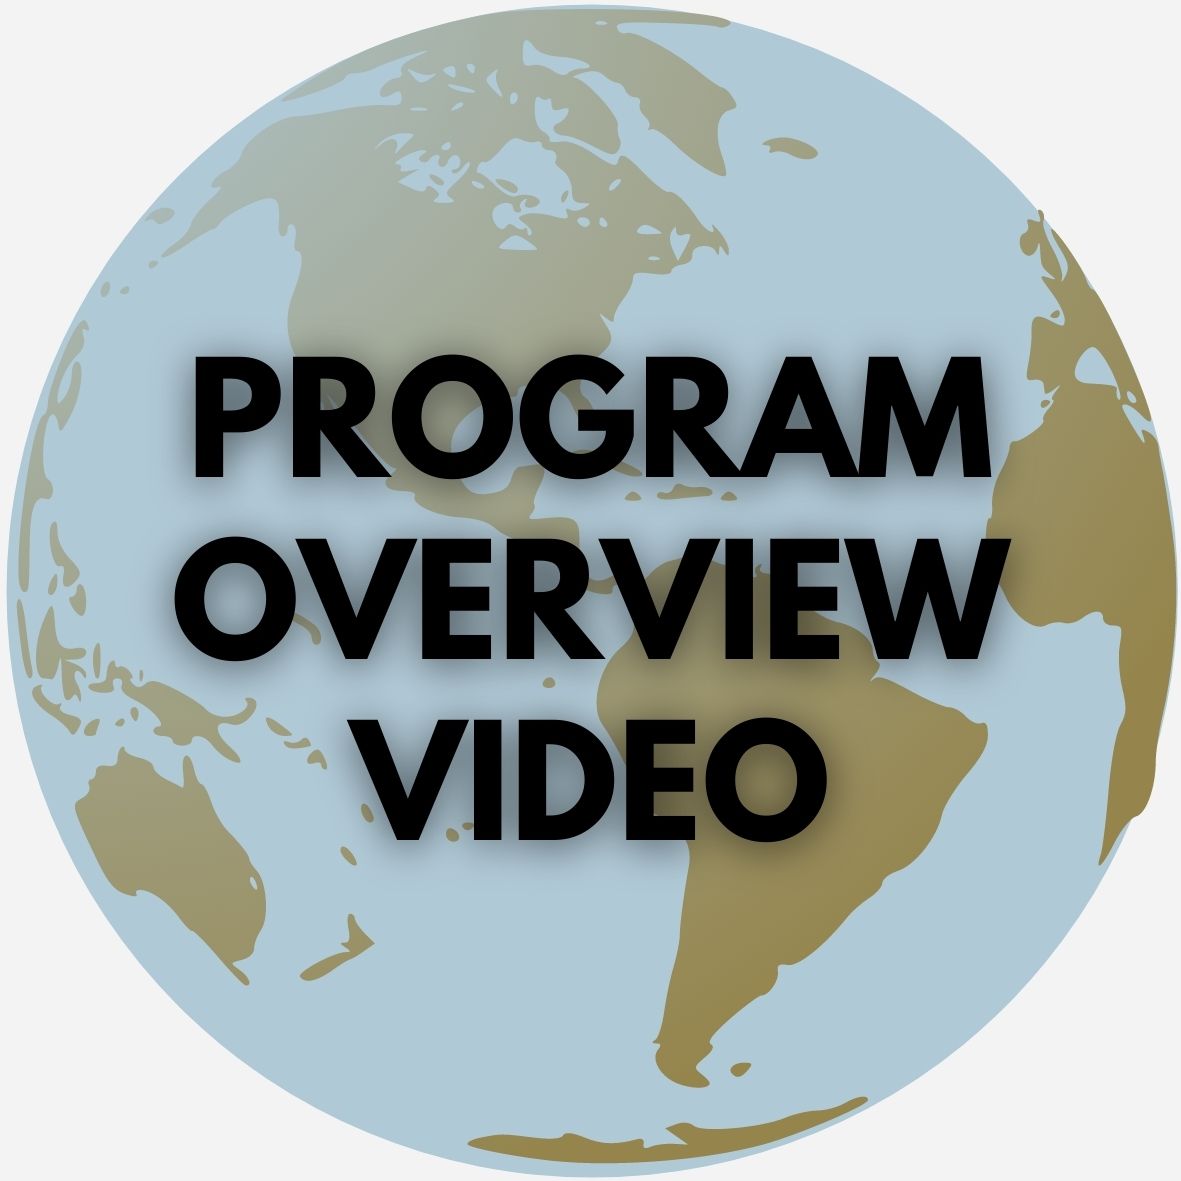 Program overview video